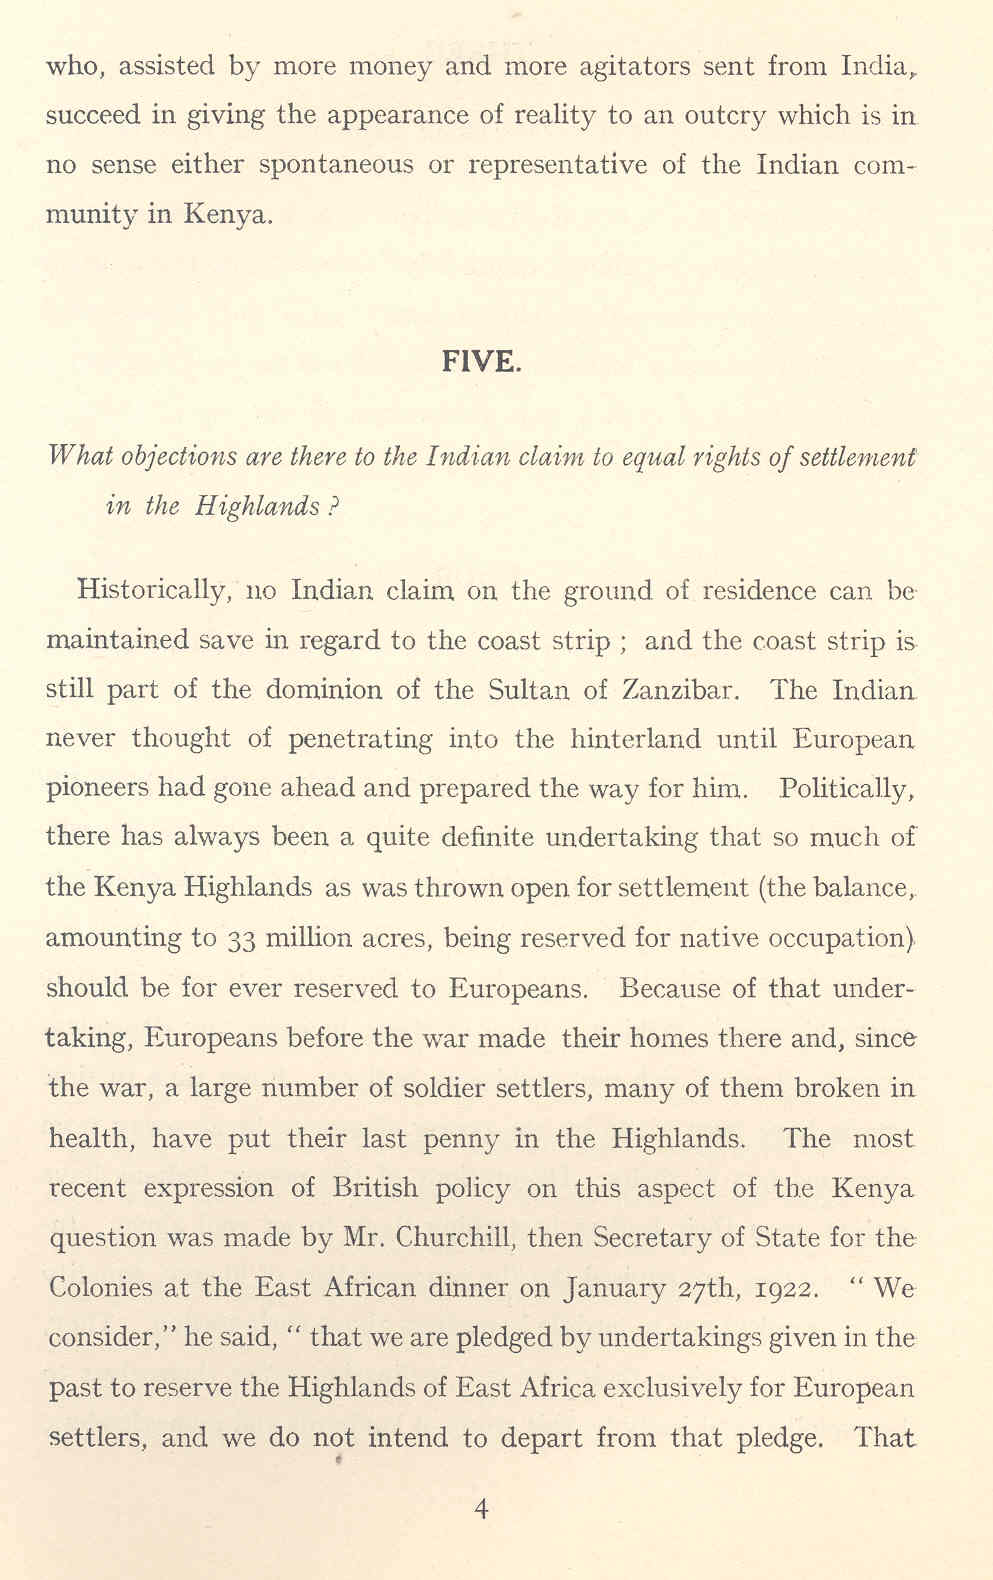 'Fourteen points about Kenya', 1923